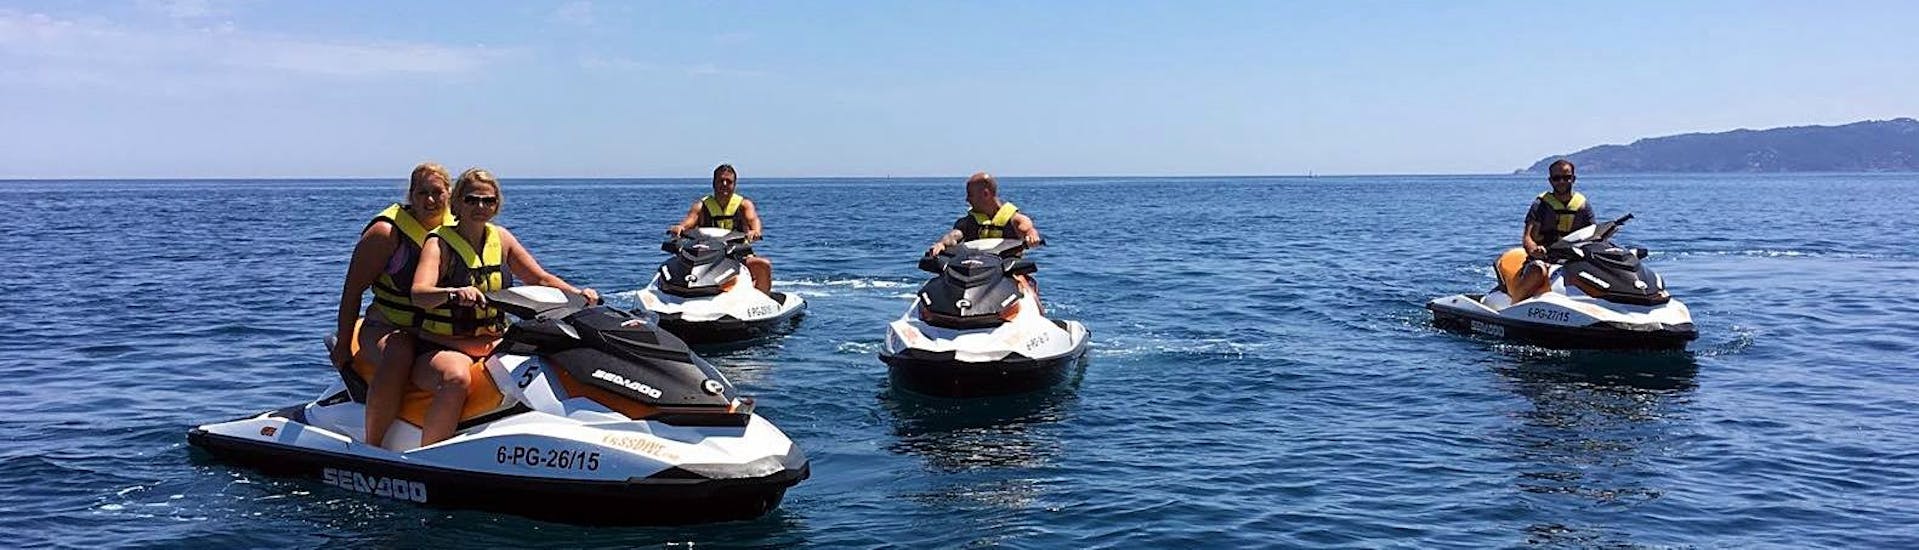 A family has fun during our Jet Ski Safari along the coast of Platja d'Aro in Sant Feliu de Guíxols with Lassdive.